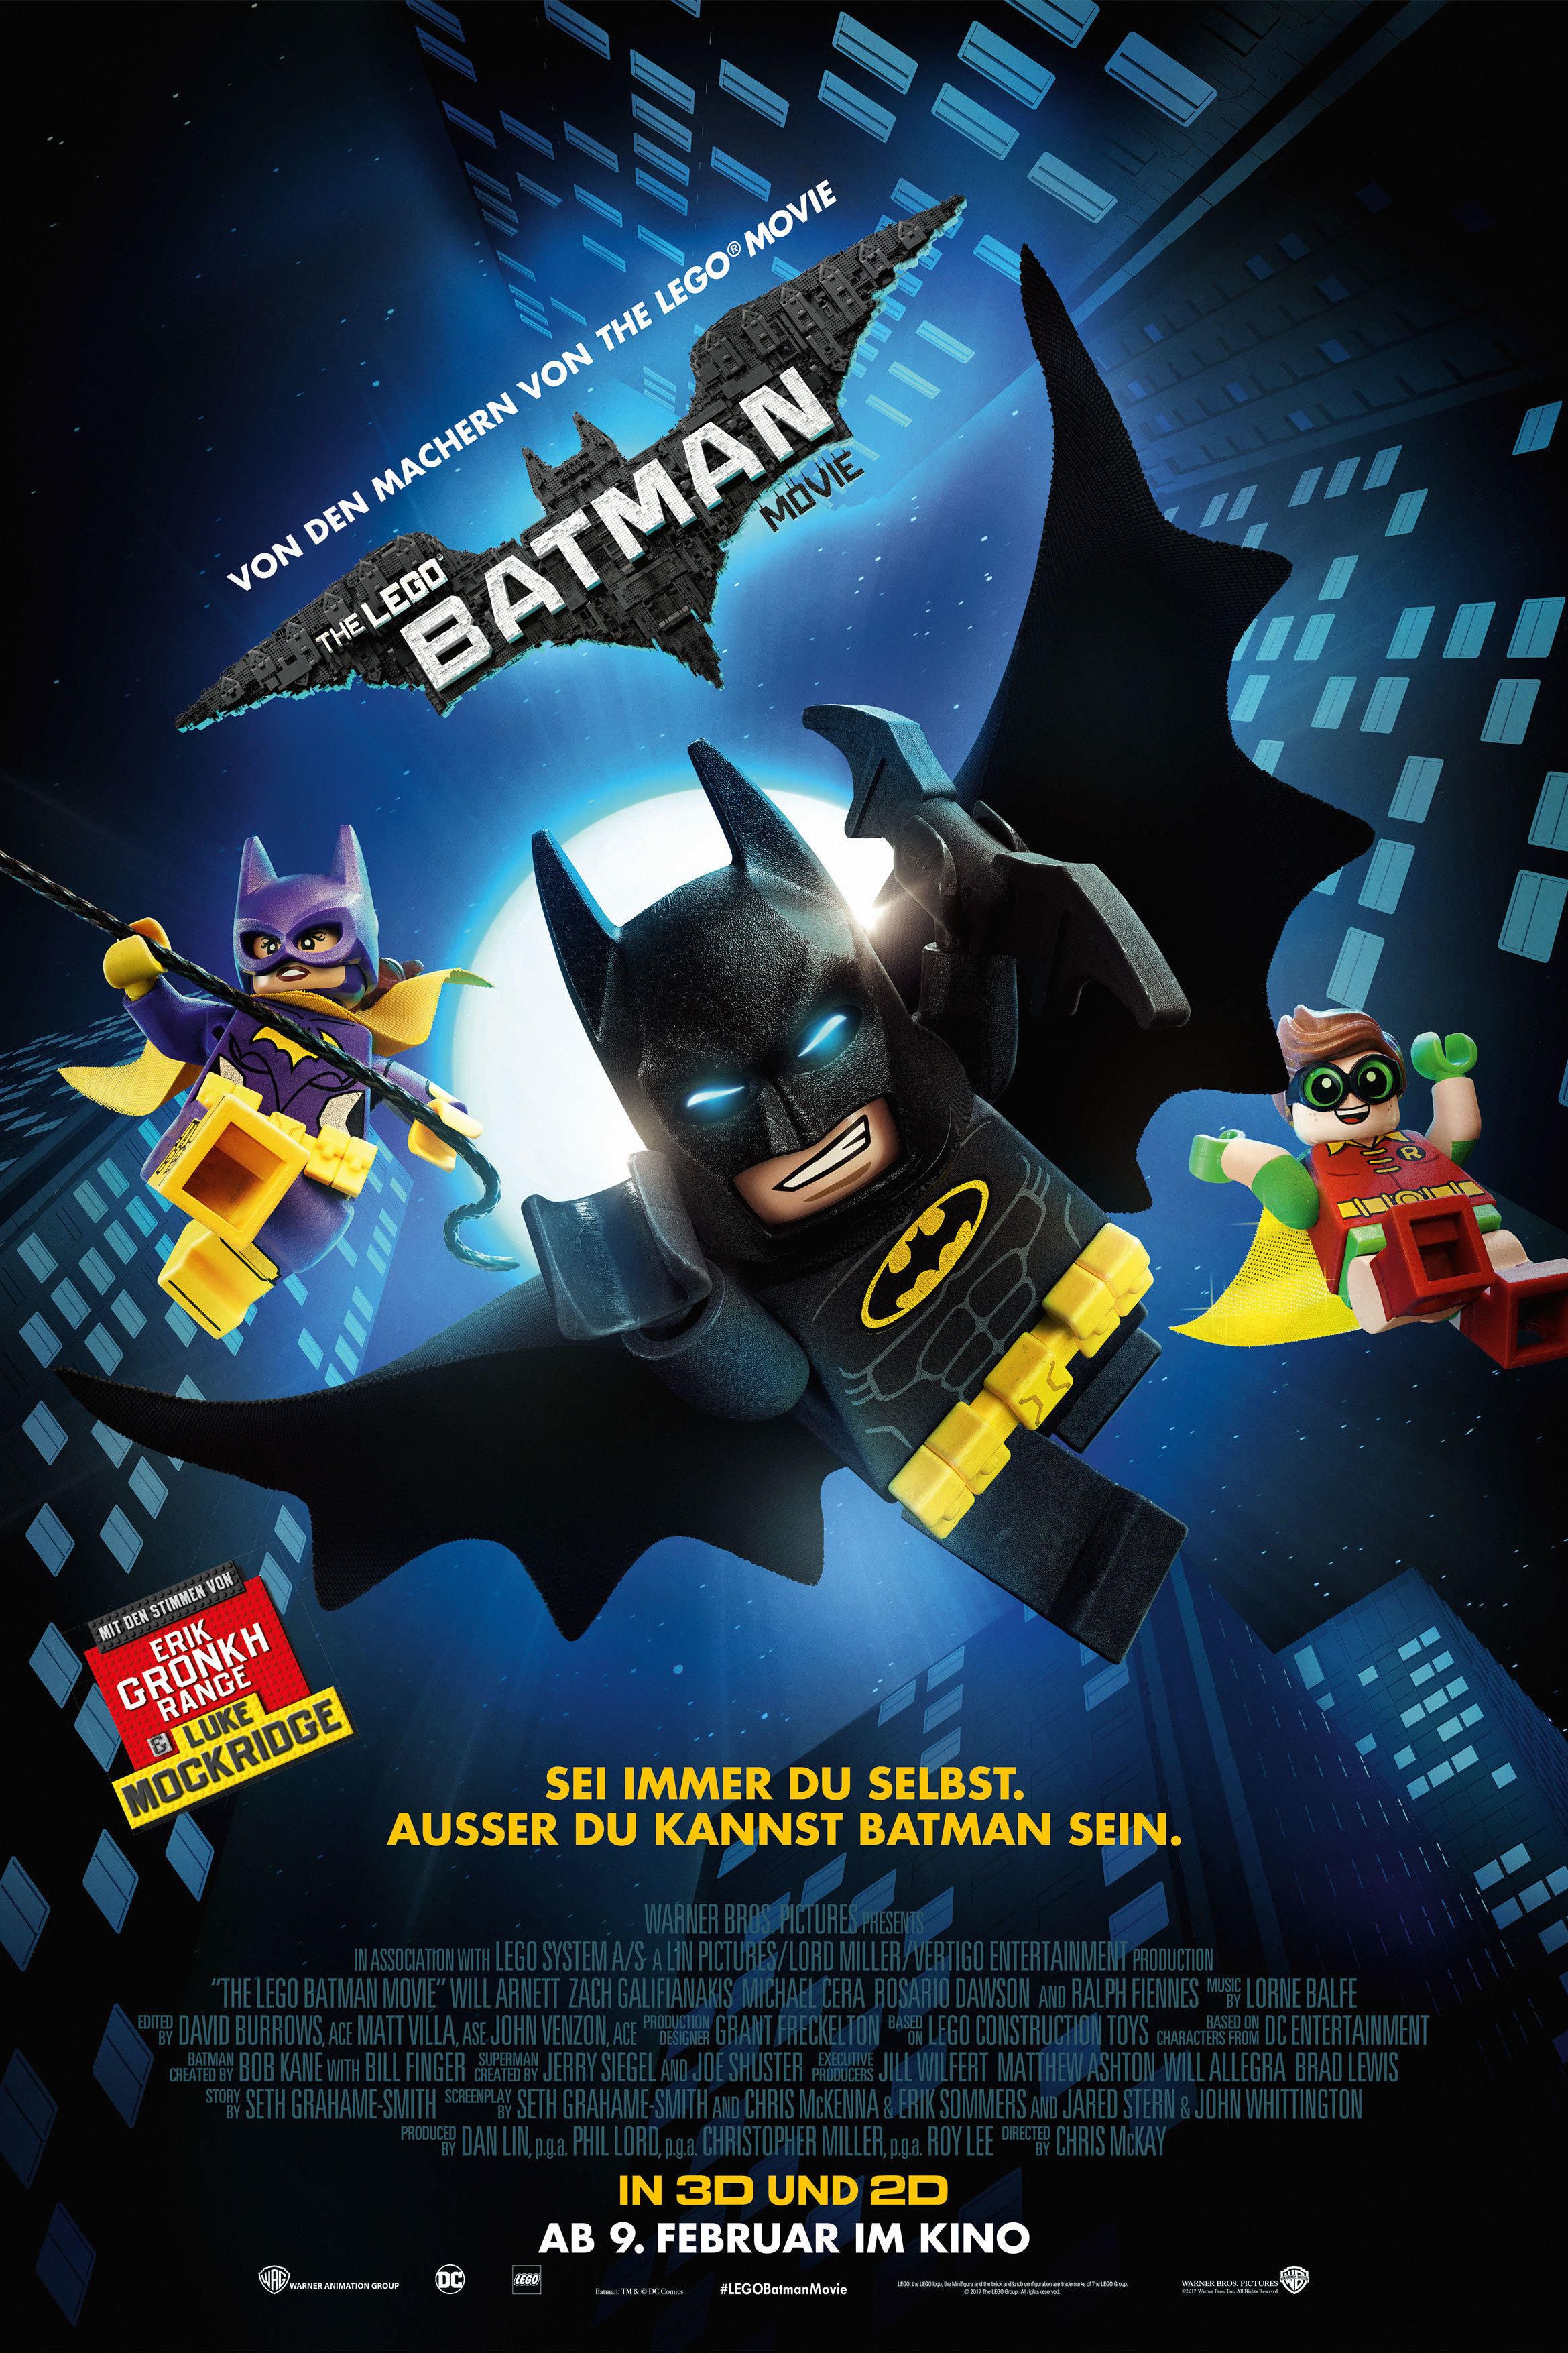 The Lego Batman Movie (2017) Movie Information & Trailers | KinoCheck